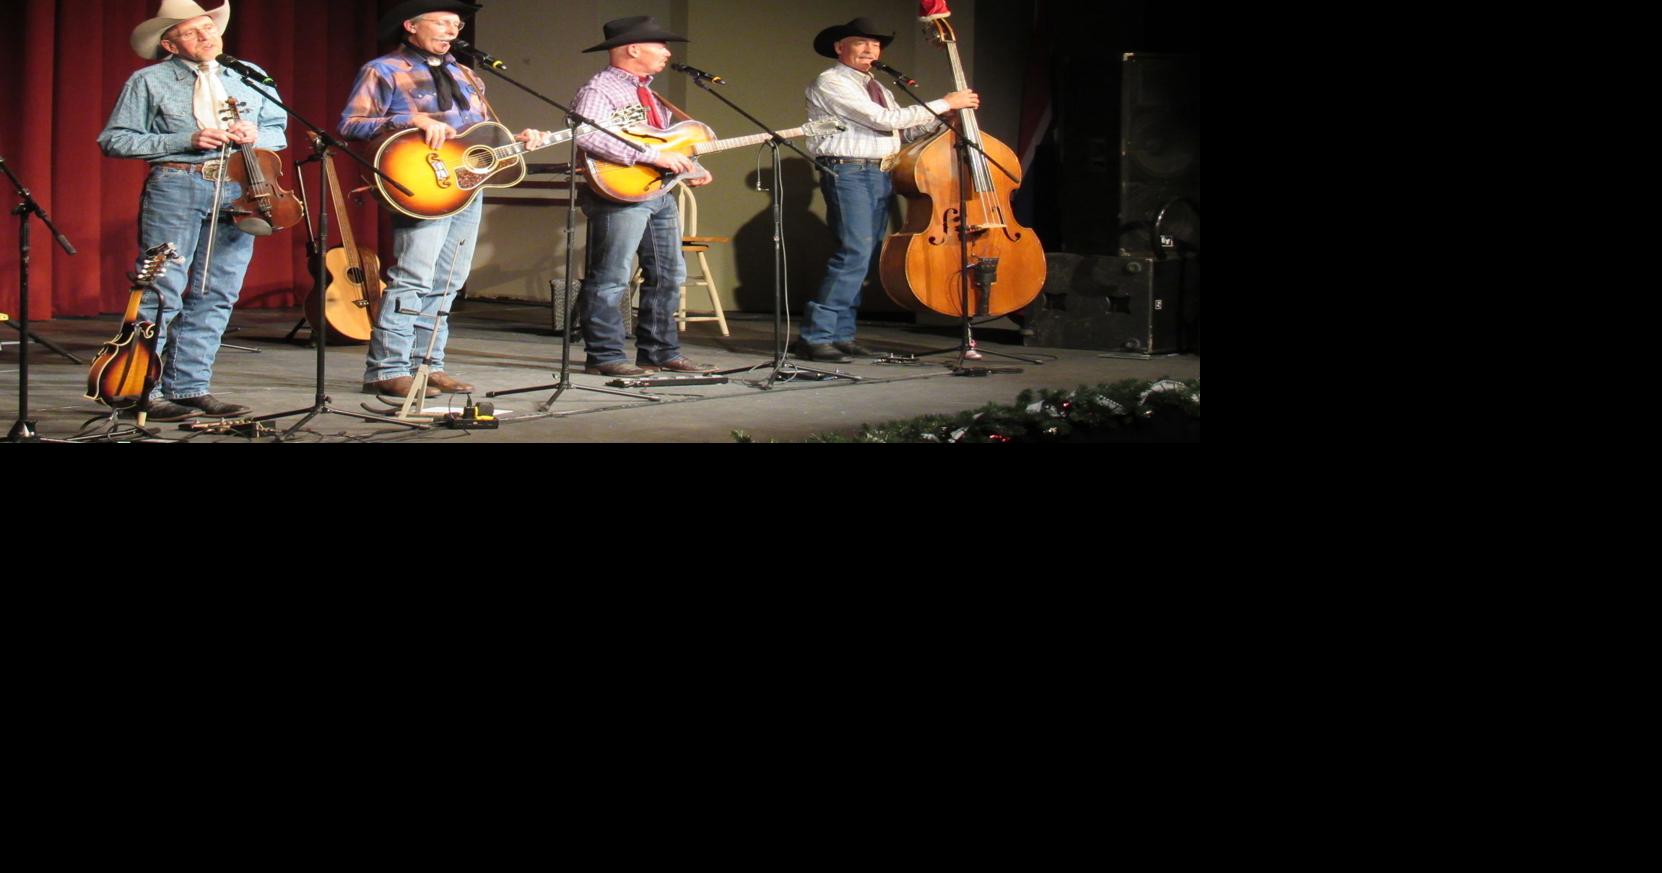 Bar J Wranglers: Community thanks singing cowboys for years of joy and  light | Rocket Miner 